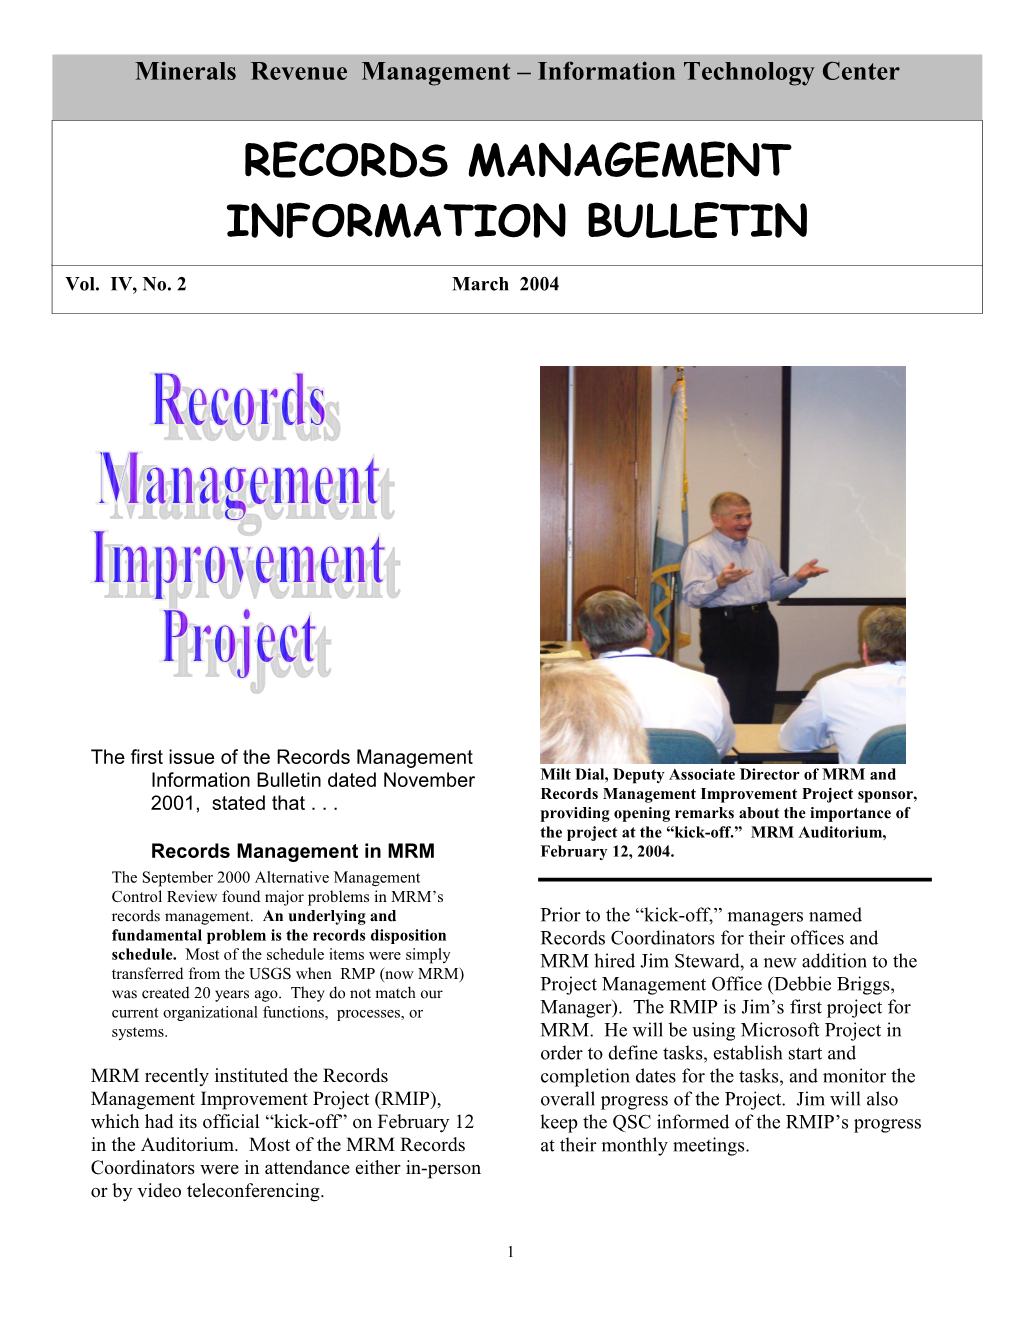 Records Management Information Bulletin